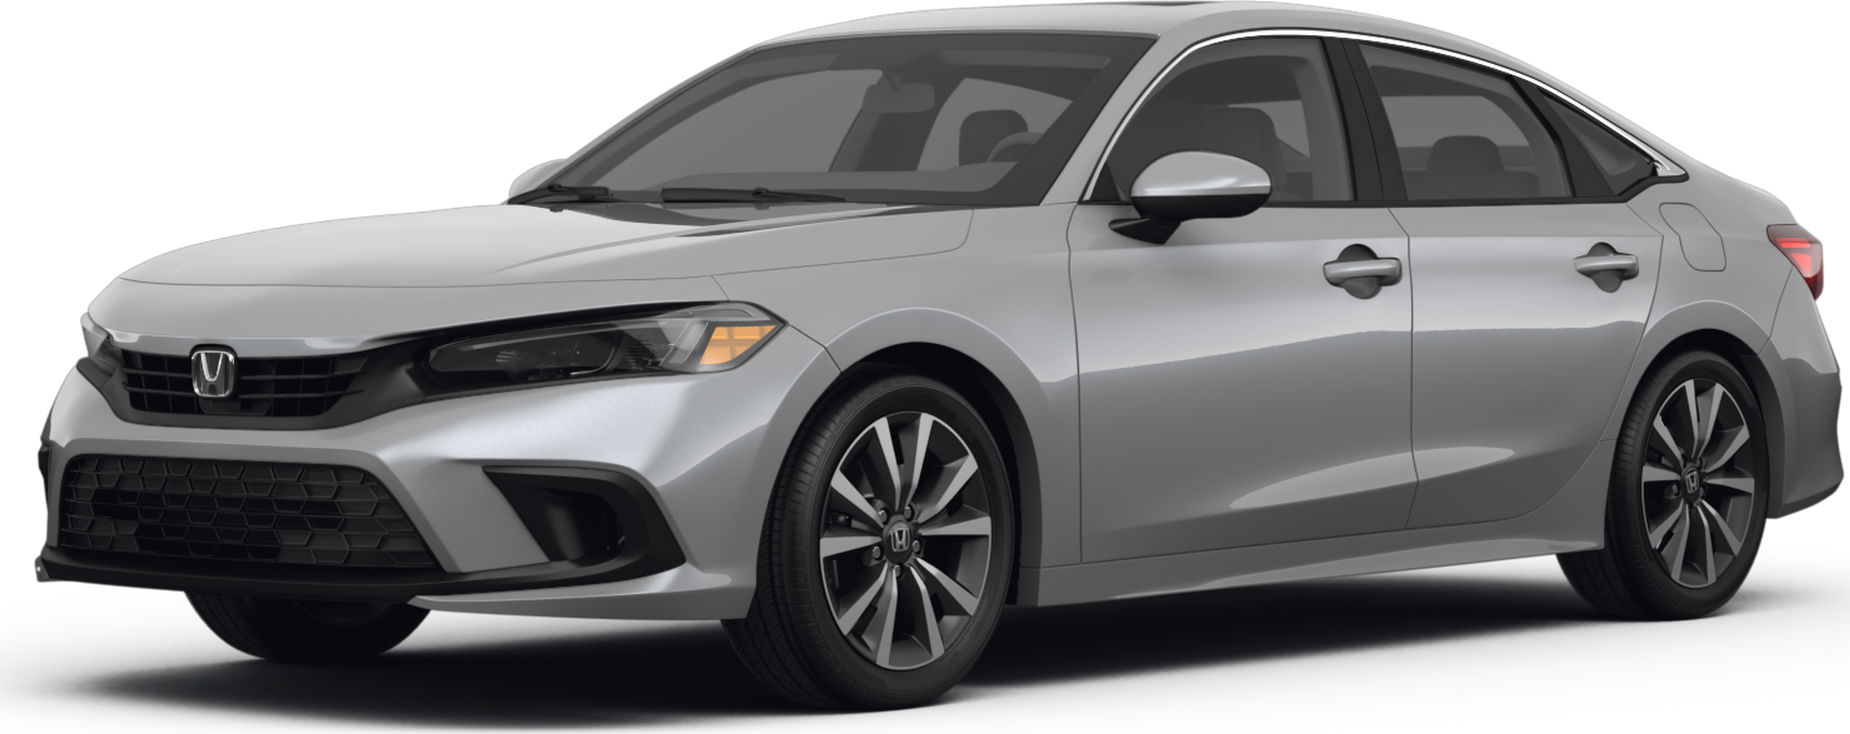 New 2022 Honda Civic Reviews, Pricing & Specs | Kelley Blue Book